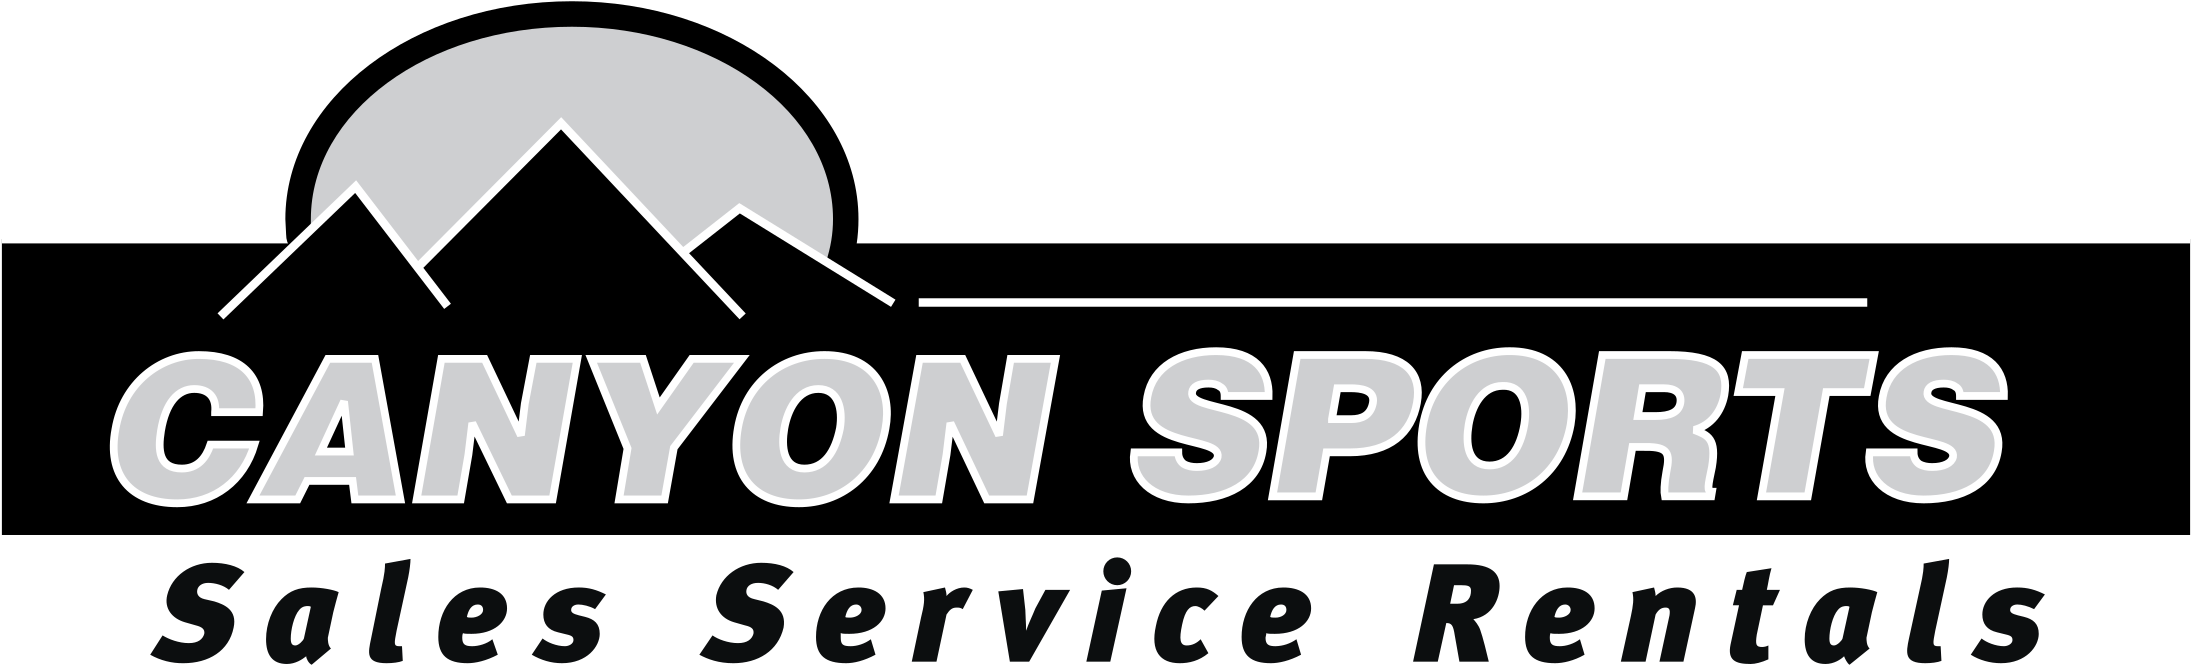 Canyon Sports Logo Png Transparent - Promo 9-piece Tool Kit (2400x2400), Png Download